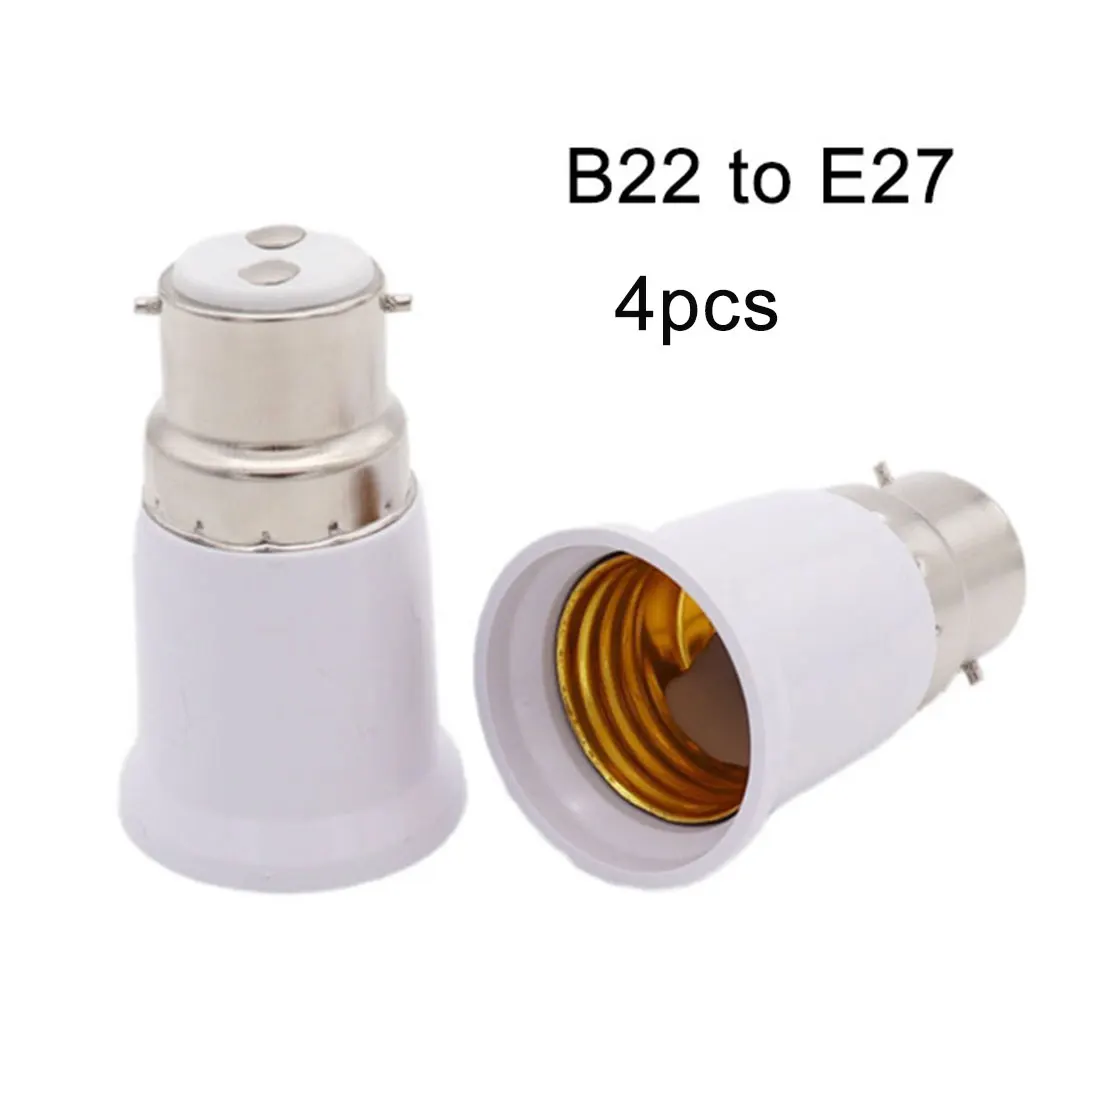 4pcs Pack B22 to E27 Bulb Adapters Bayonet Lamp Base to Screw E26 E27 Bulb Holder Converter Two-Pin Socket to Edison Base the instrument lights screw and bayonet 24v30v110v220v flat 5w 10w lamp bulb a1198